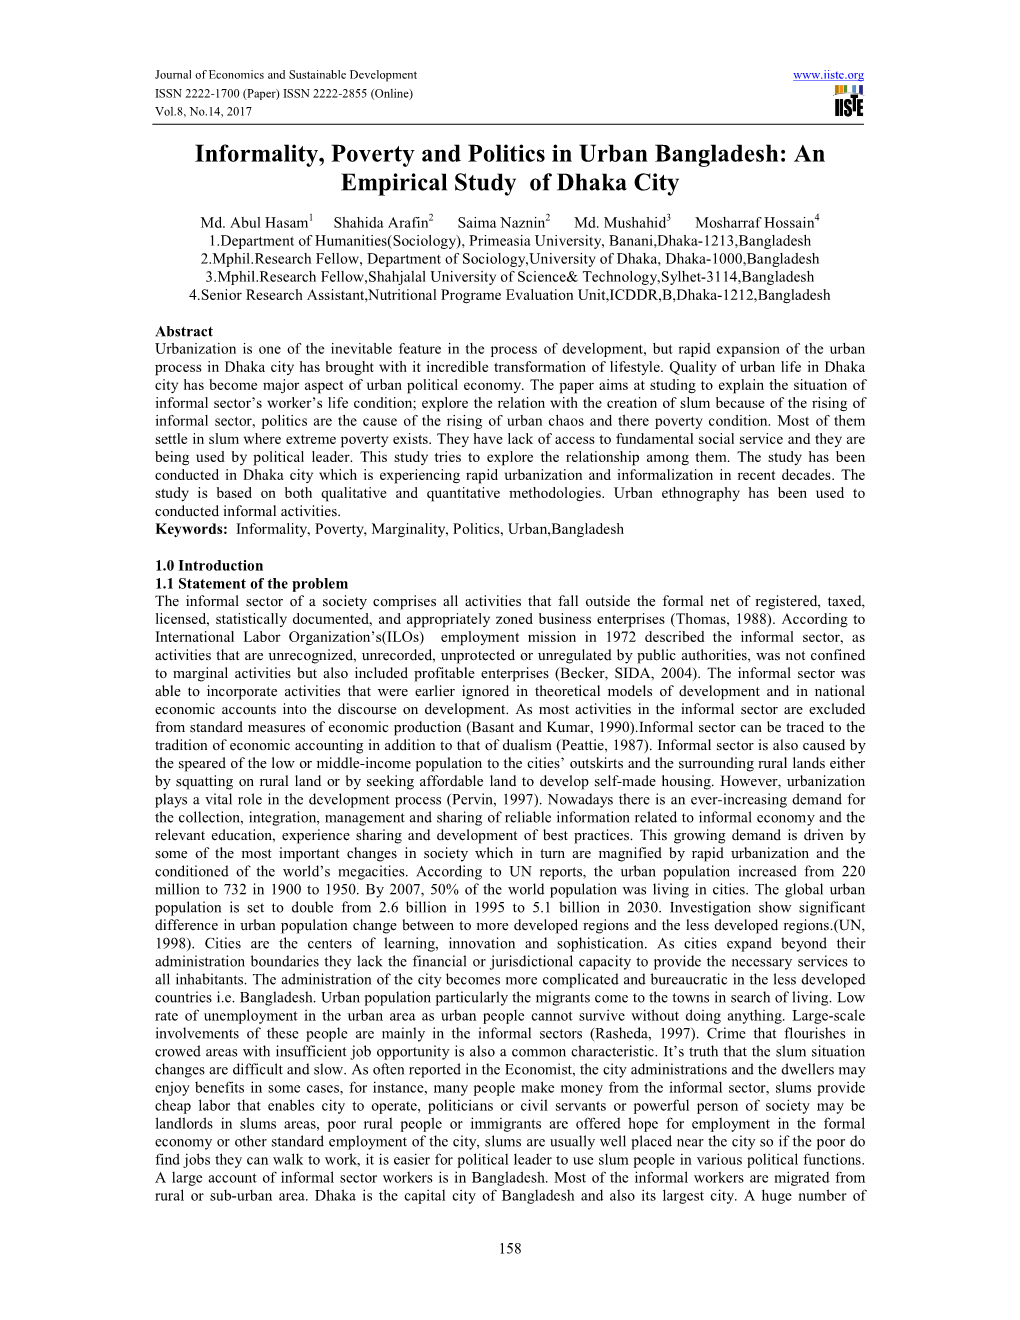 Informality, Poverty and Politics in Urban Bangladesh: an Empirical Study of Dhaka City